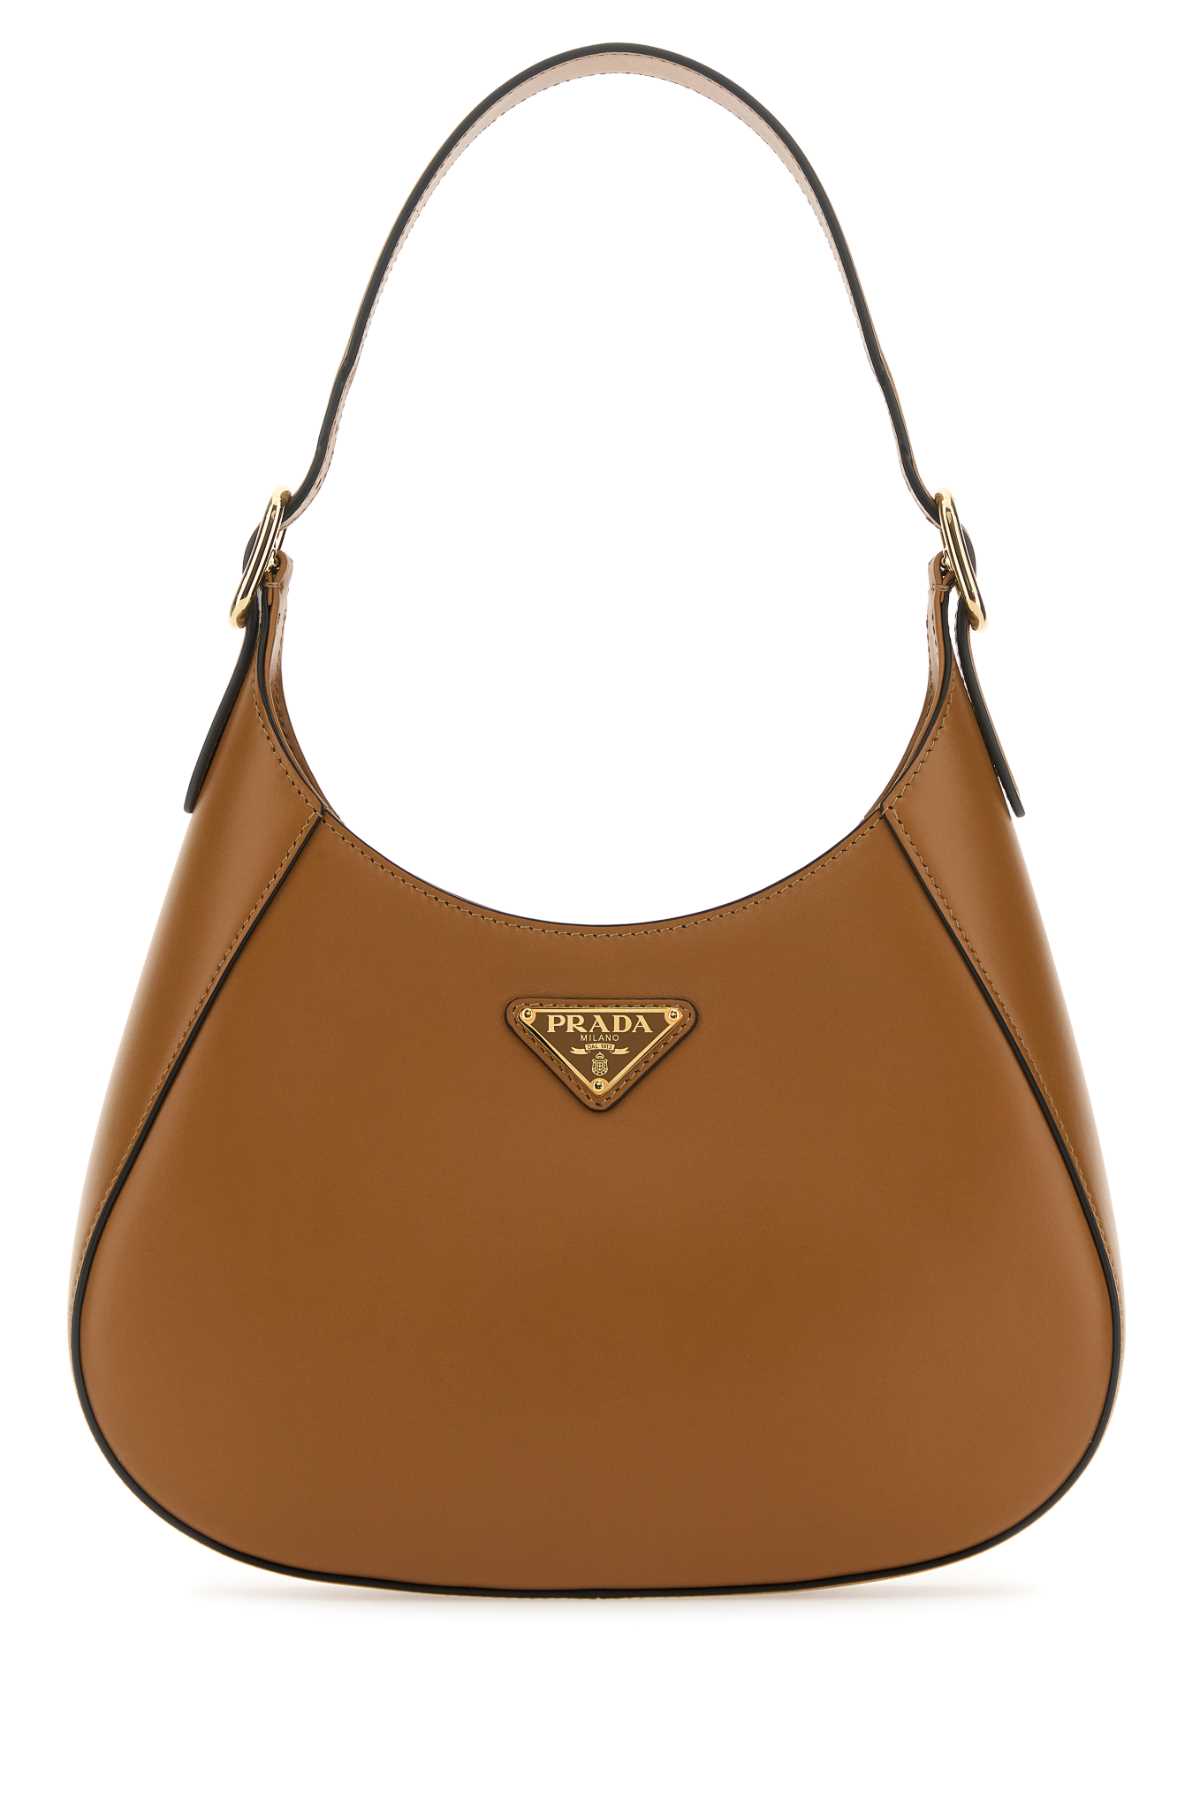 Prada Caramel Leather Shoulder Bag In Caramel 0 N